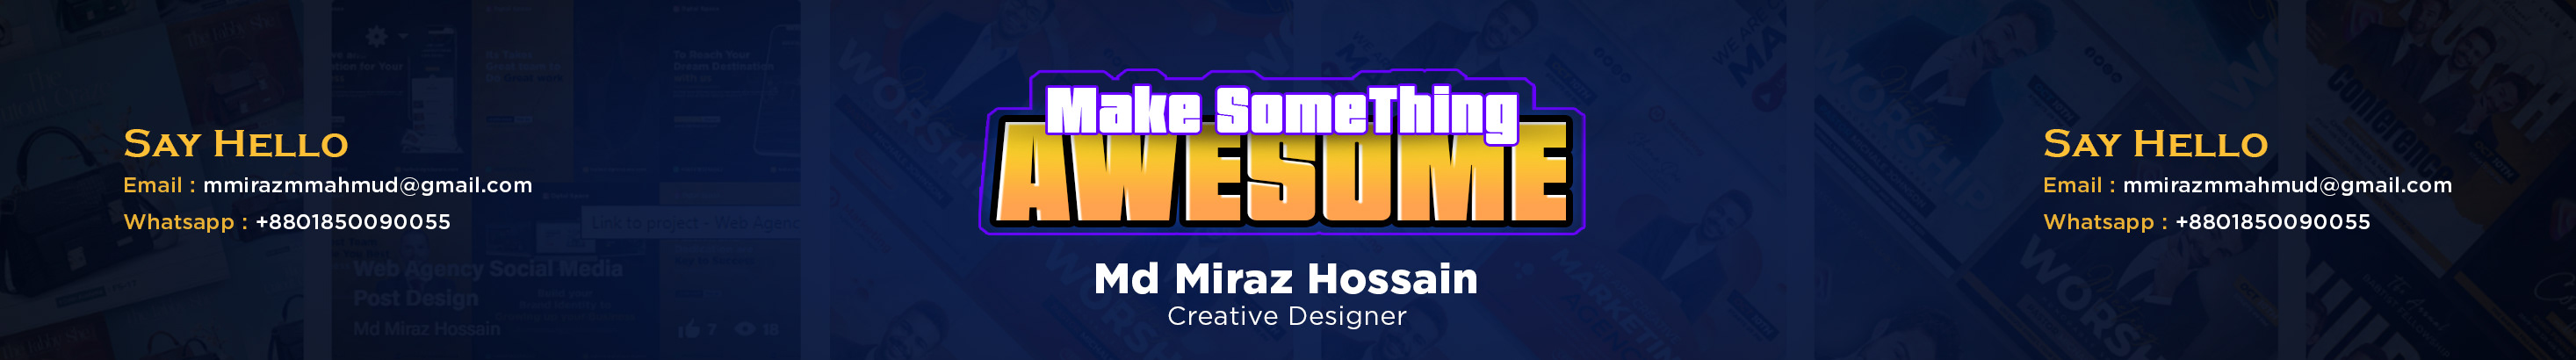 Md Miraz Hossain's profile banner